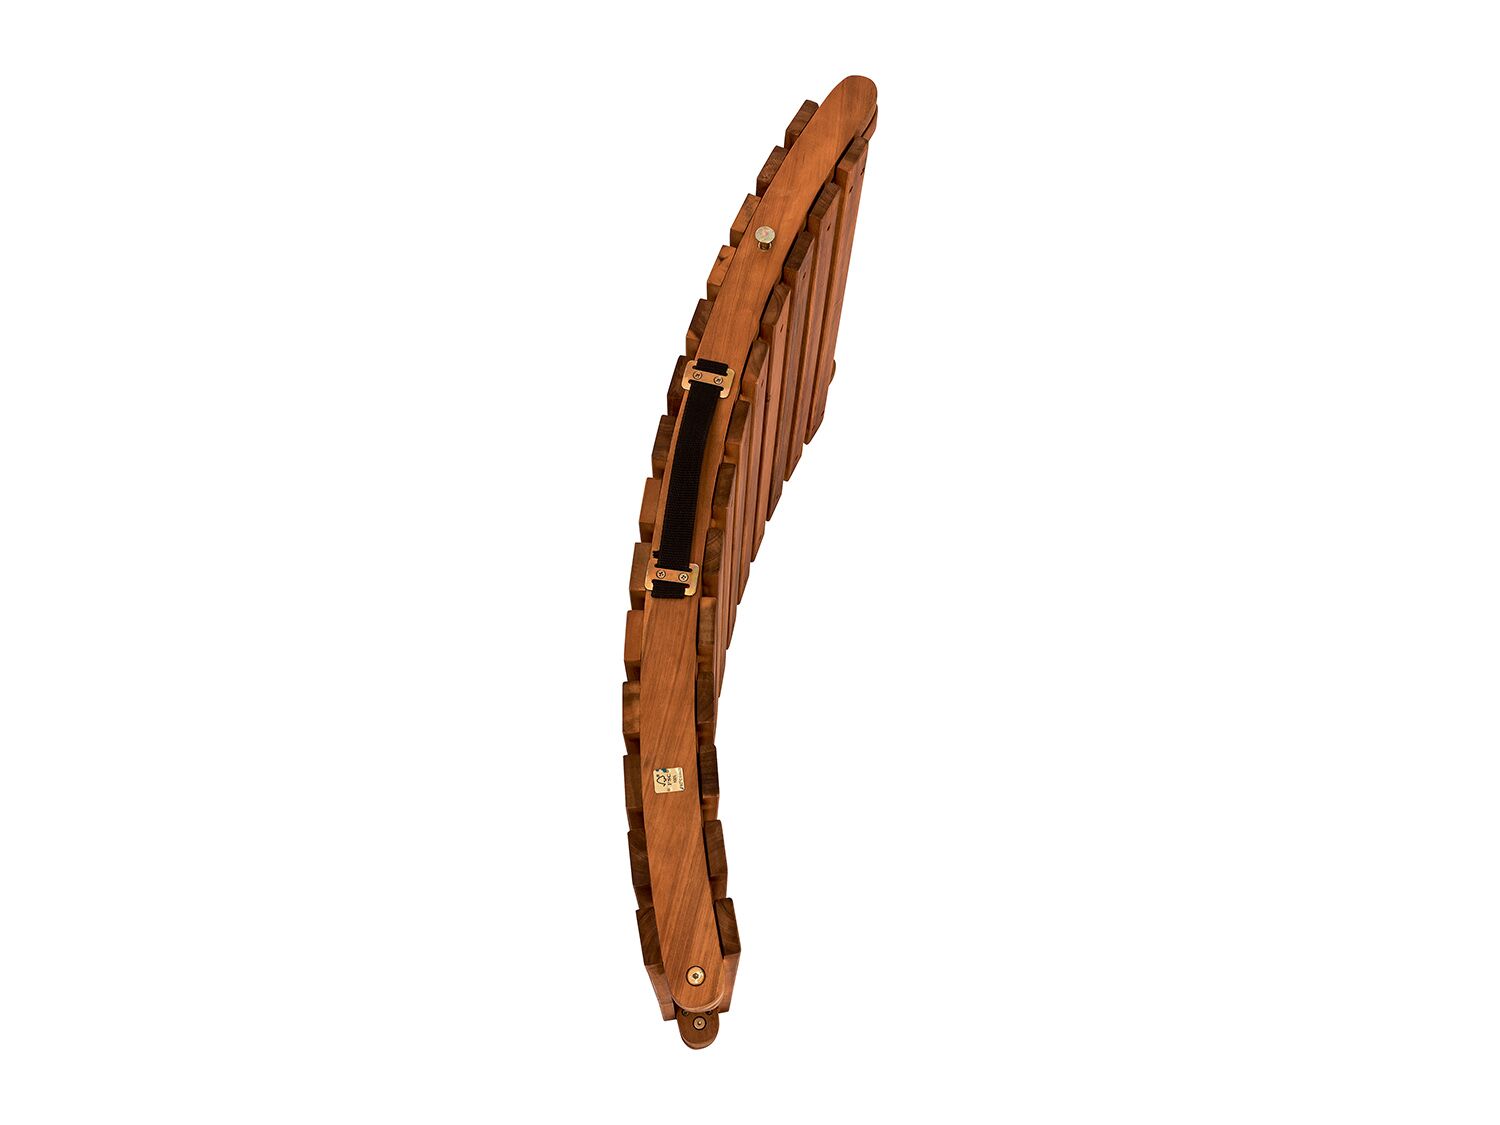 Tumbona de madera plegable color marrón